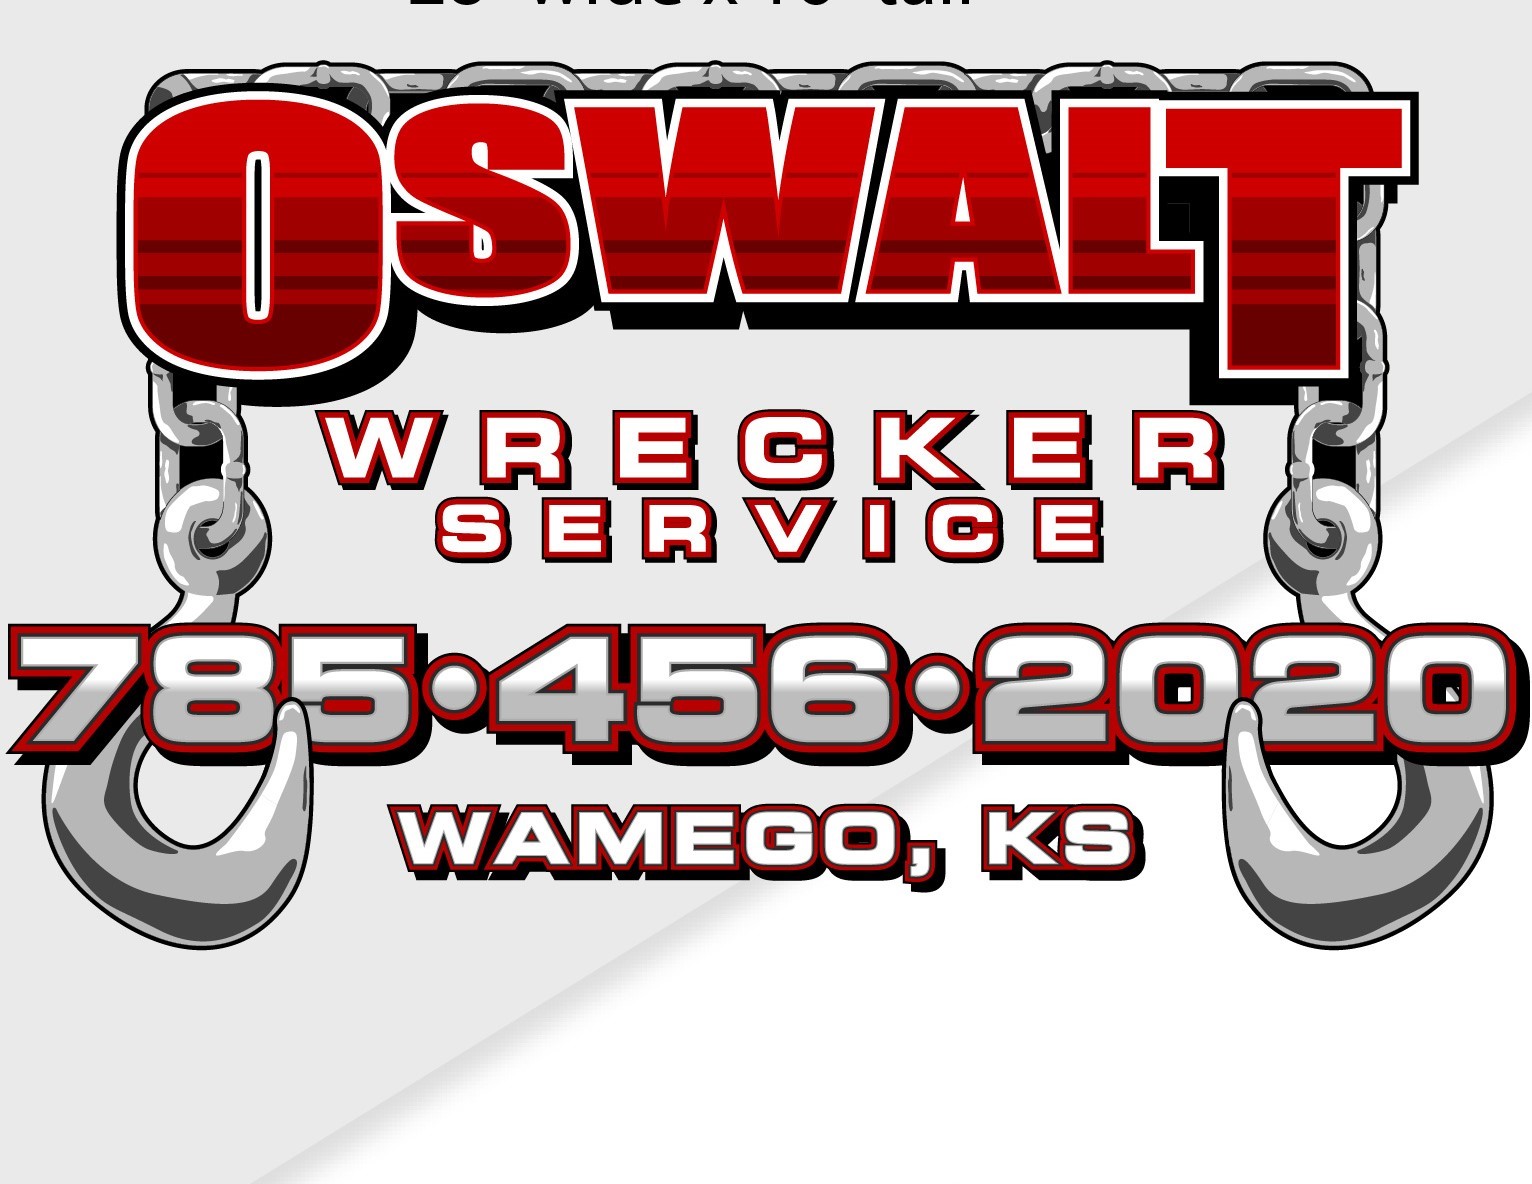 Oswalt Wrecker Service - Wamego, KS 